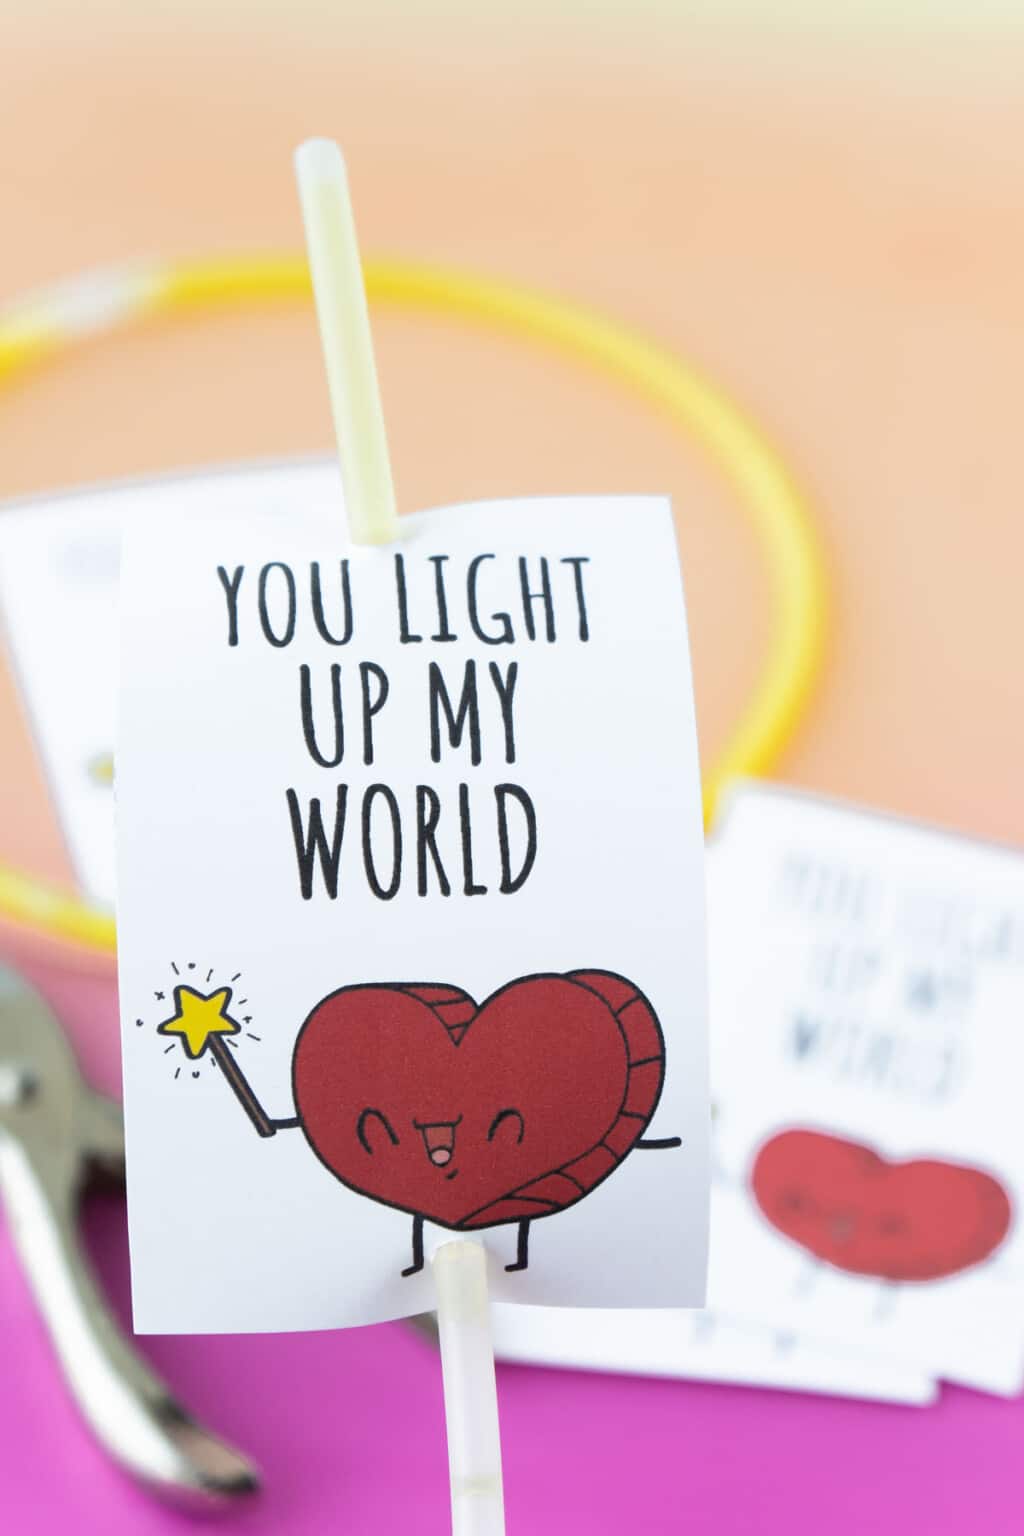 free-printable-glow-stick-valentines-play-party-plan